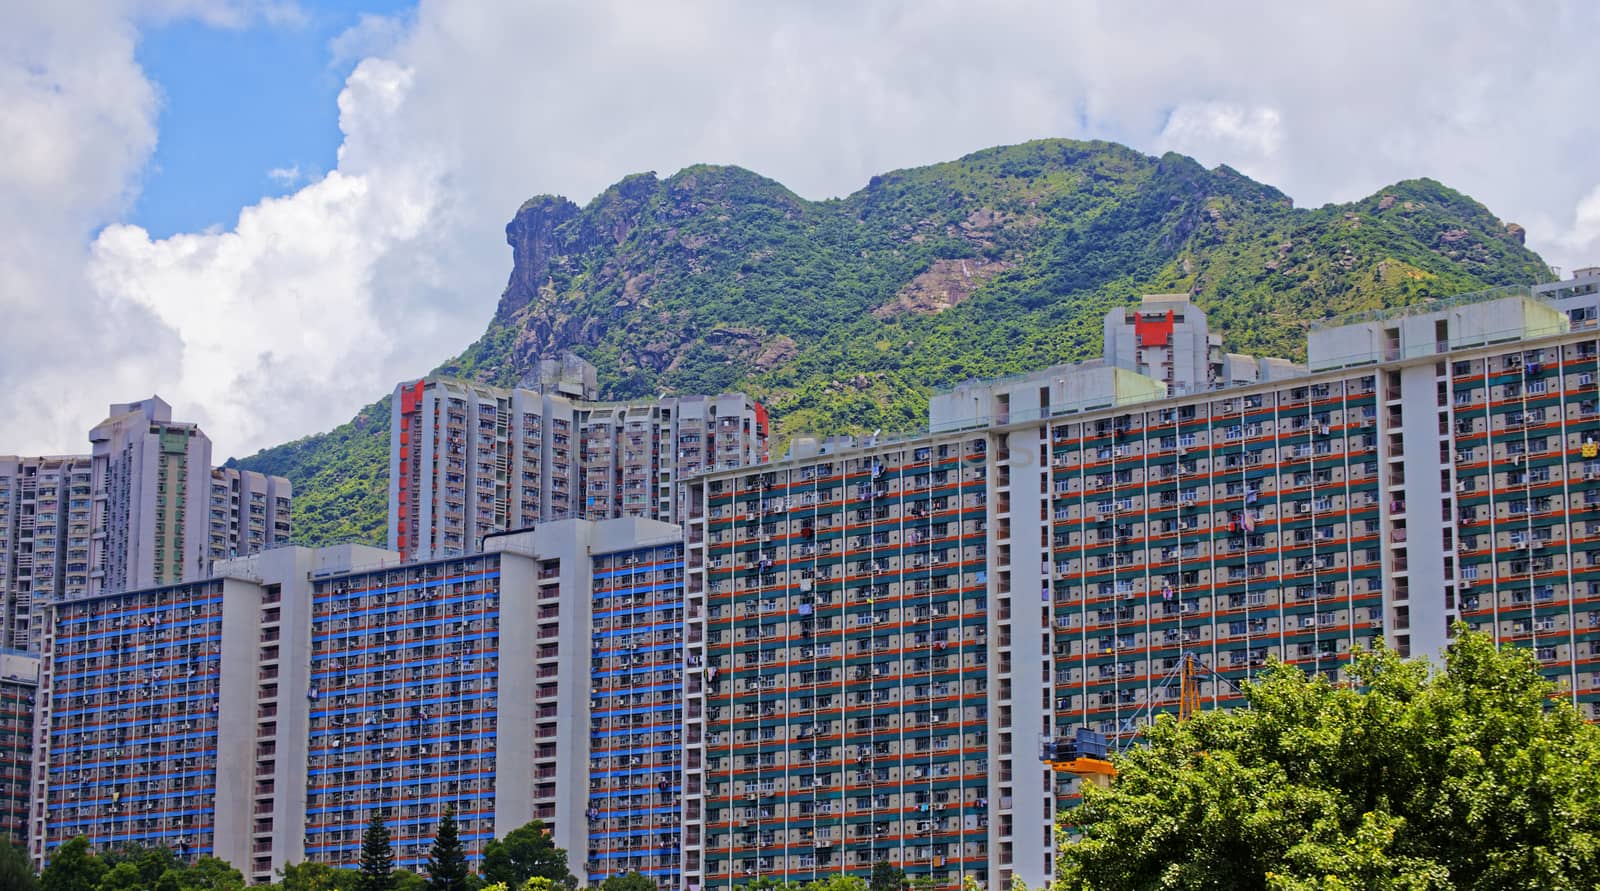 hong kong public estate with landmark lion rock at day